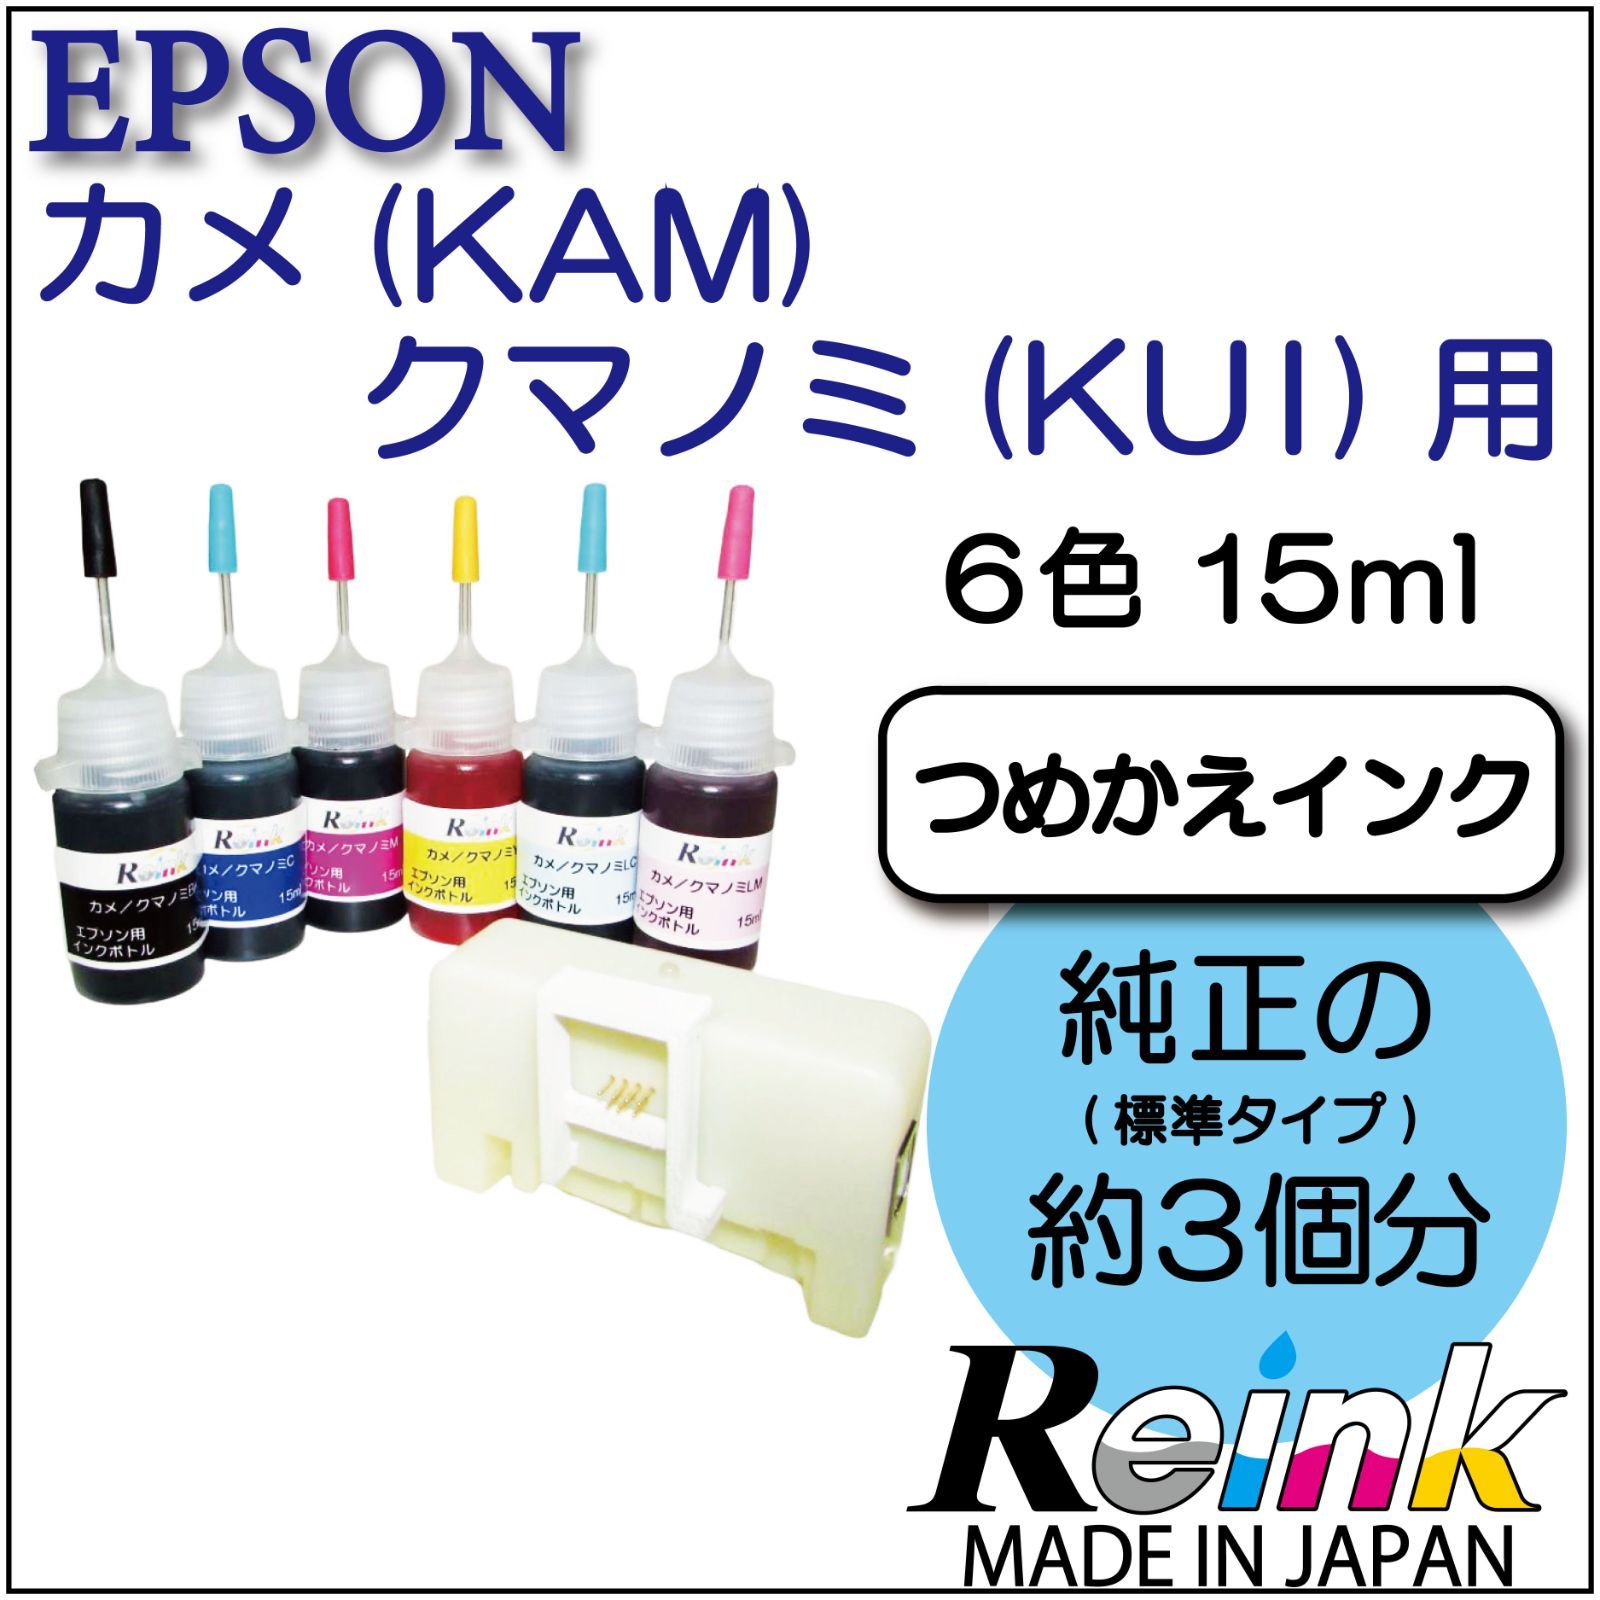 EPSON エプソン 用 プリンター インク カメ (KAM) クマノミ (KUI) 共通 ...